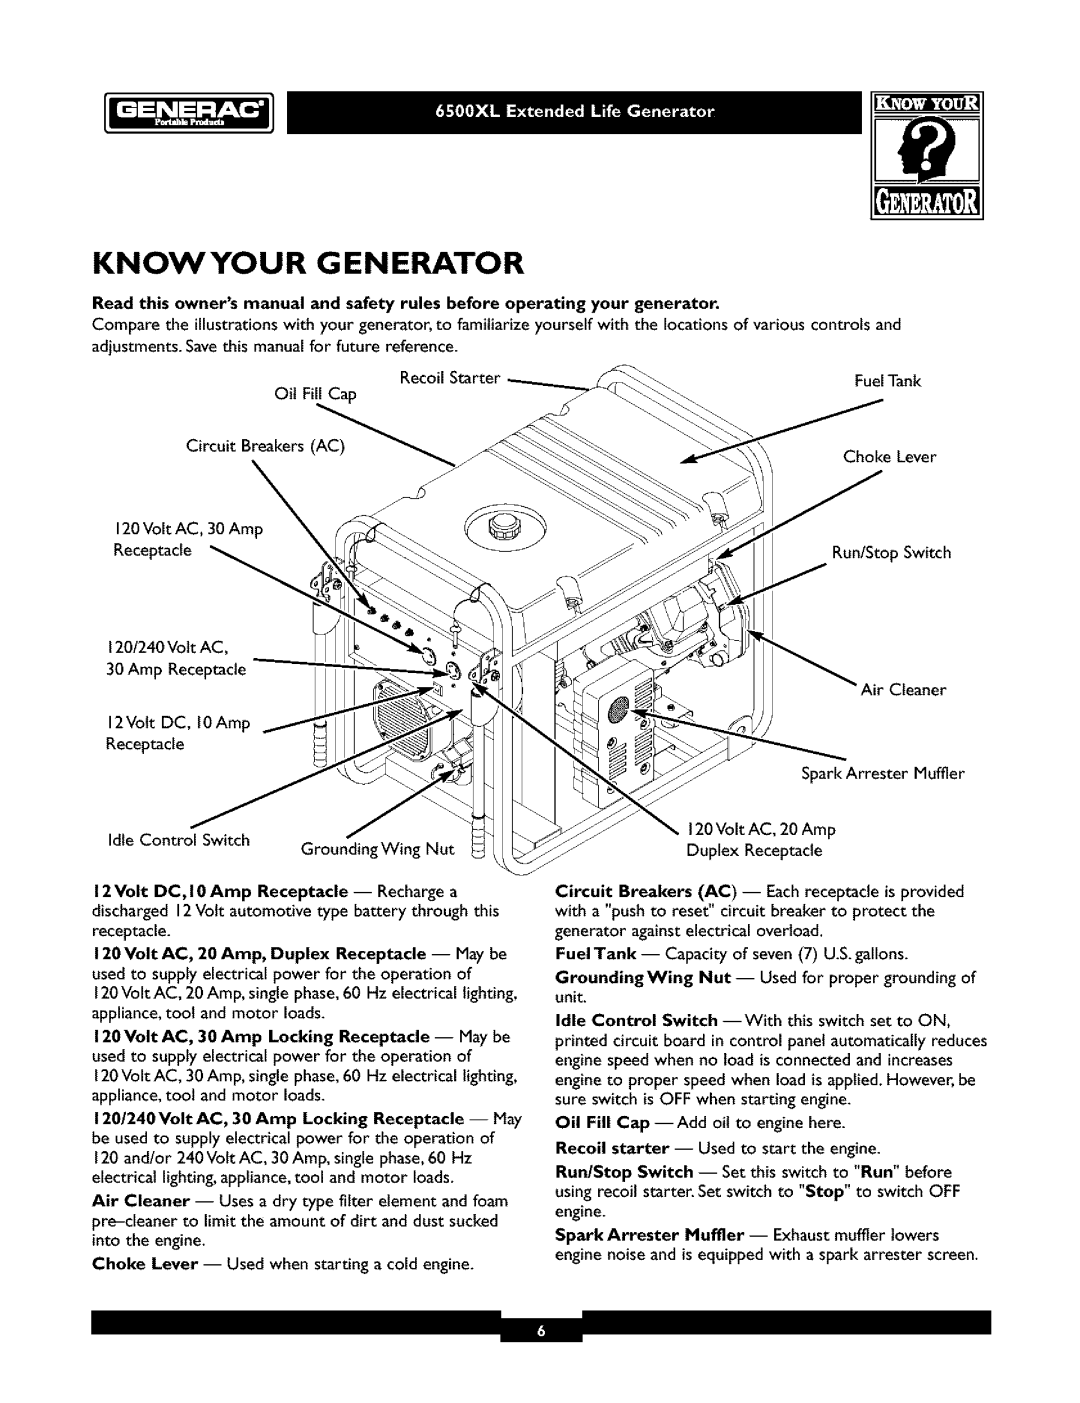 Generac 6500XL owner manual Knowyour Generator, FuelTank 